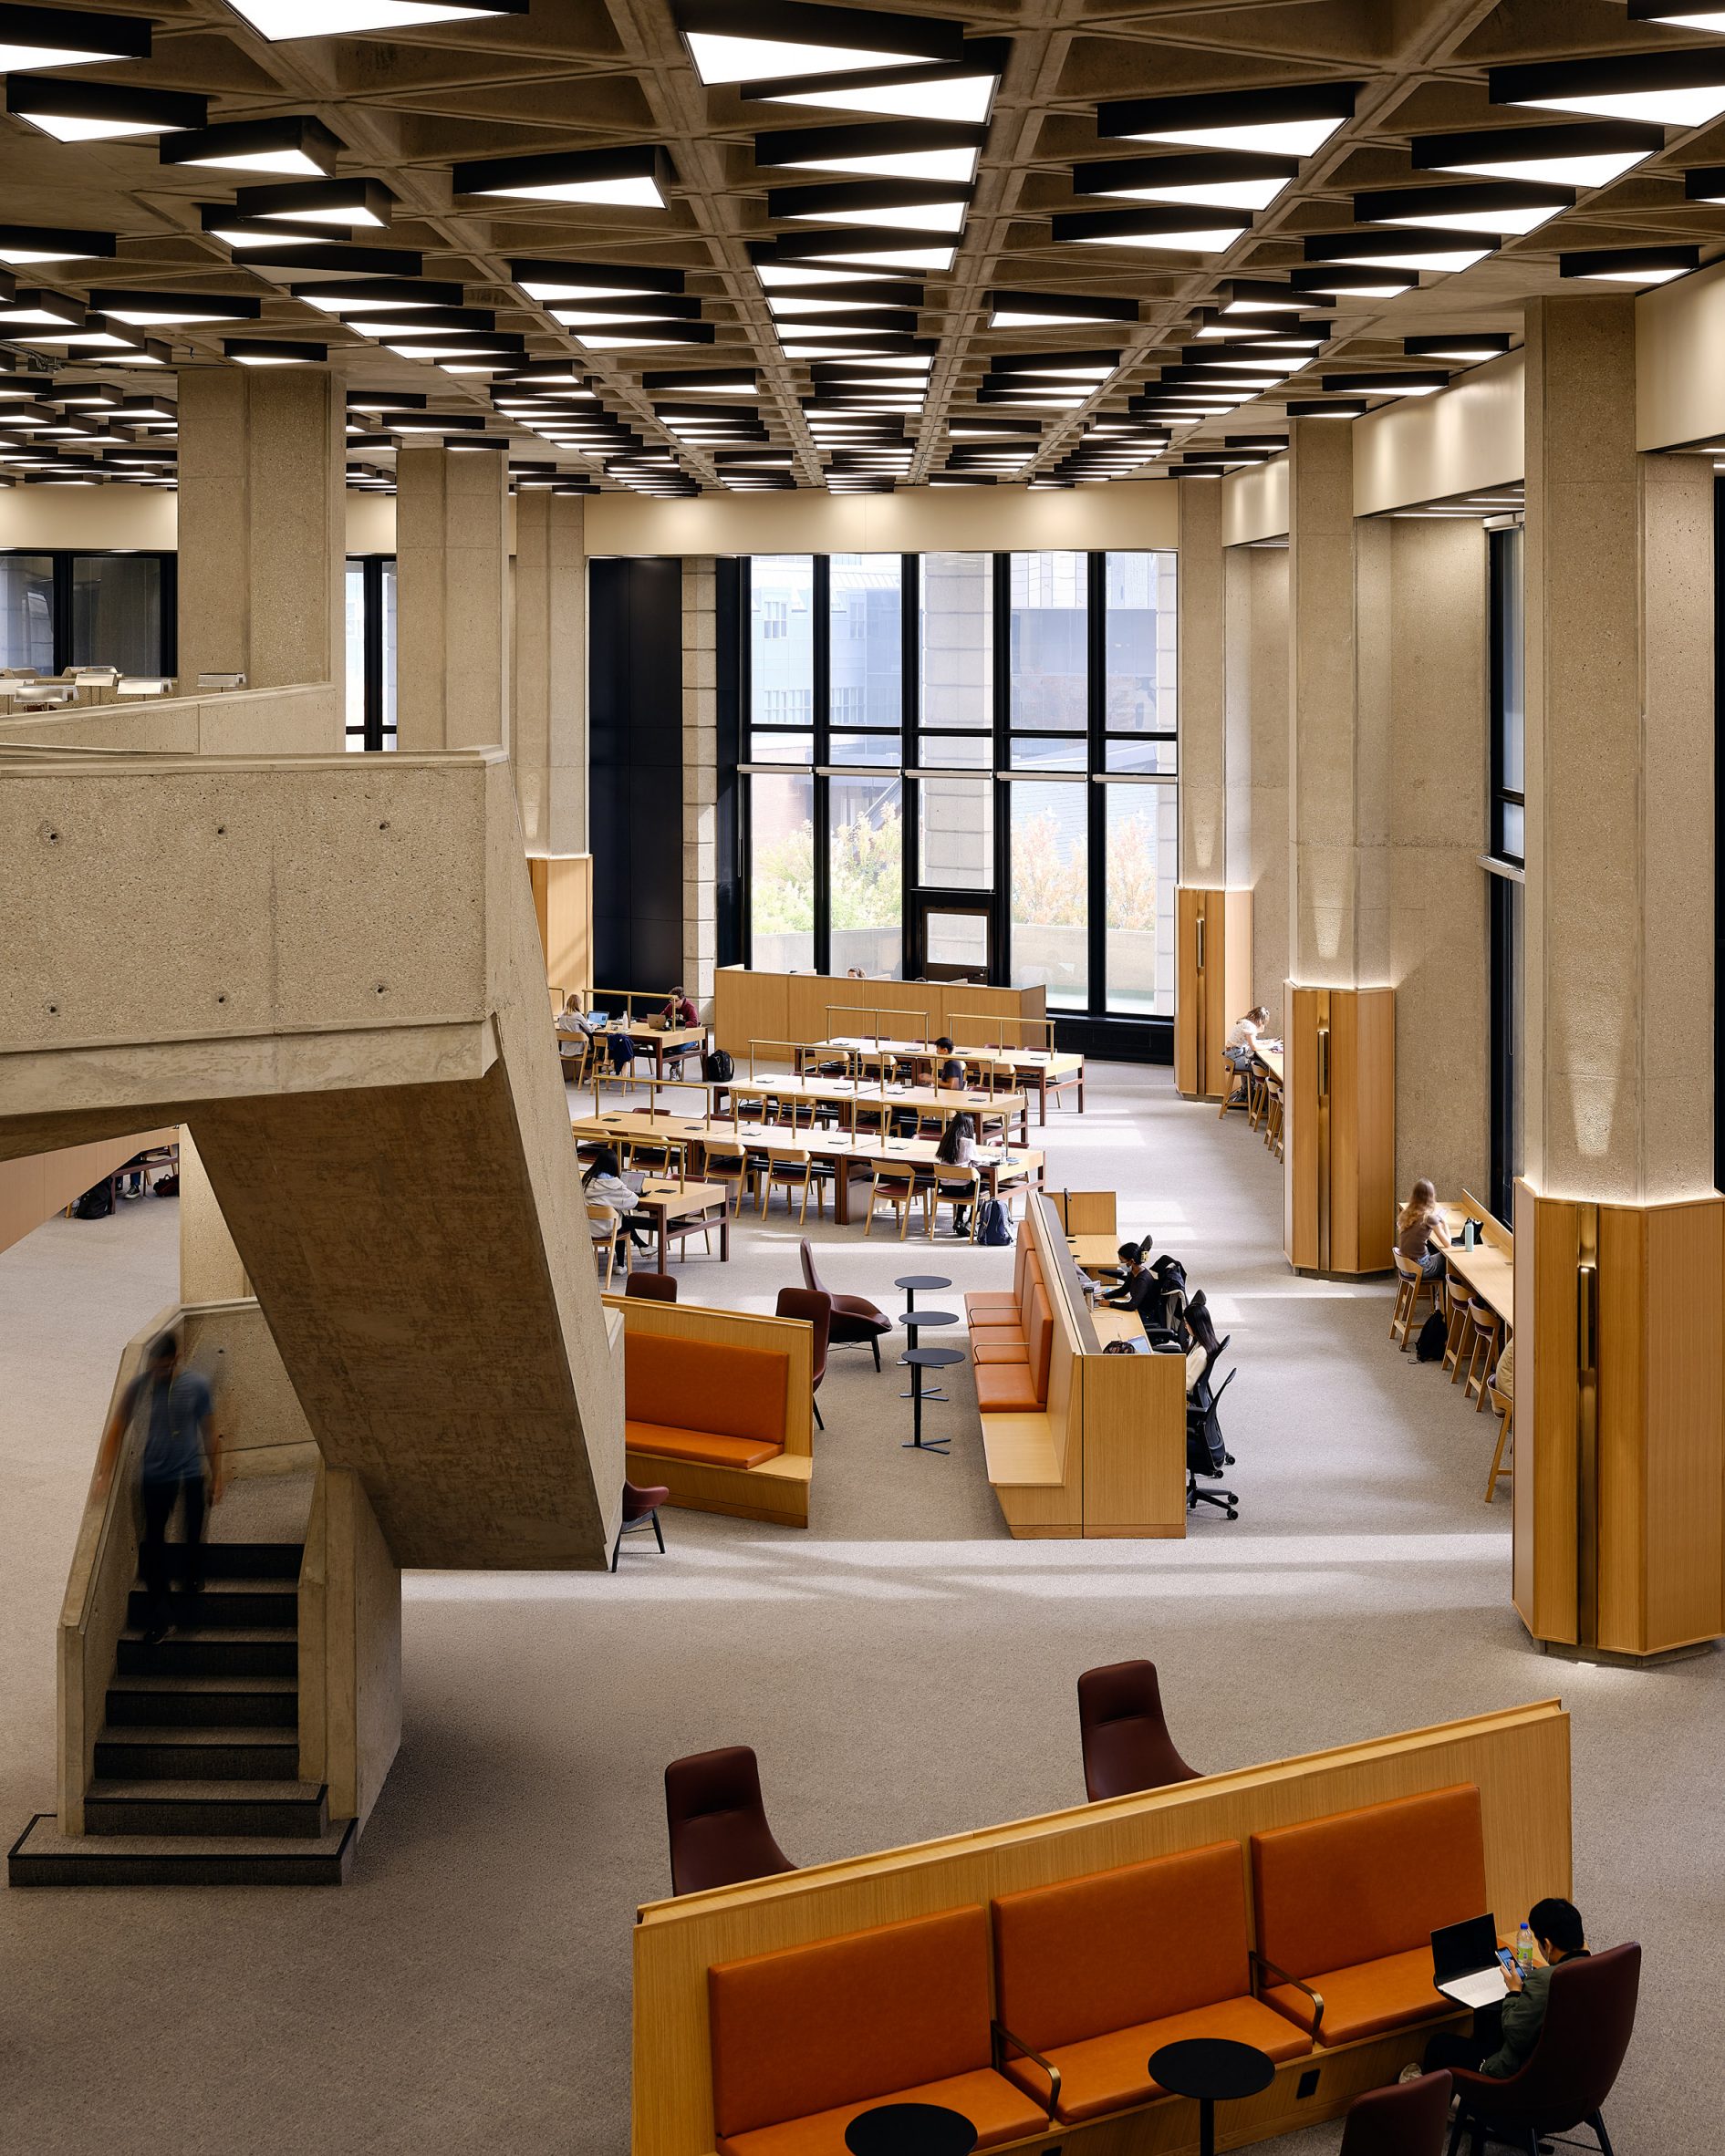 Brutalist concrete library interior